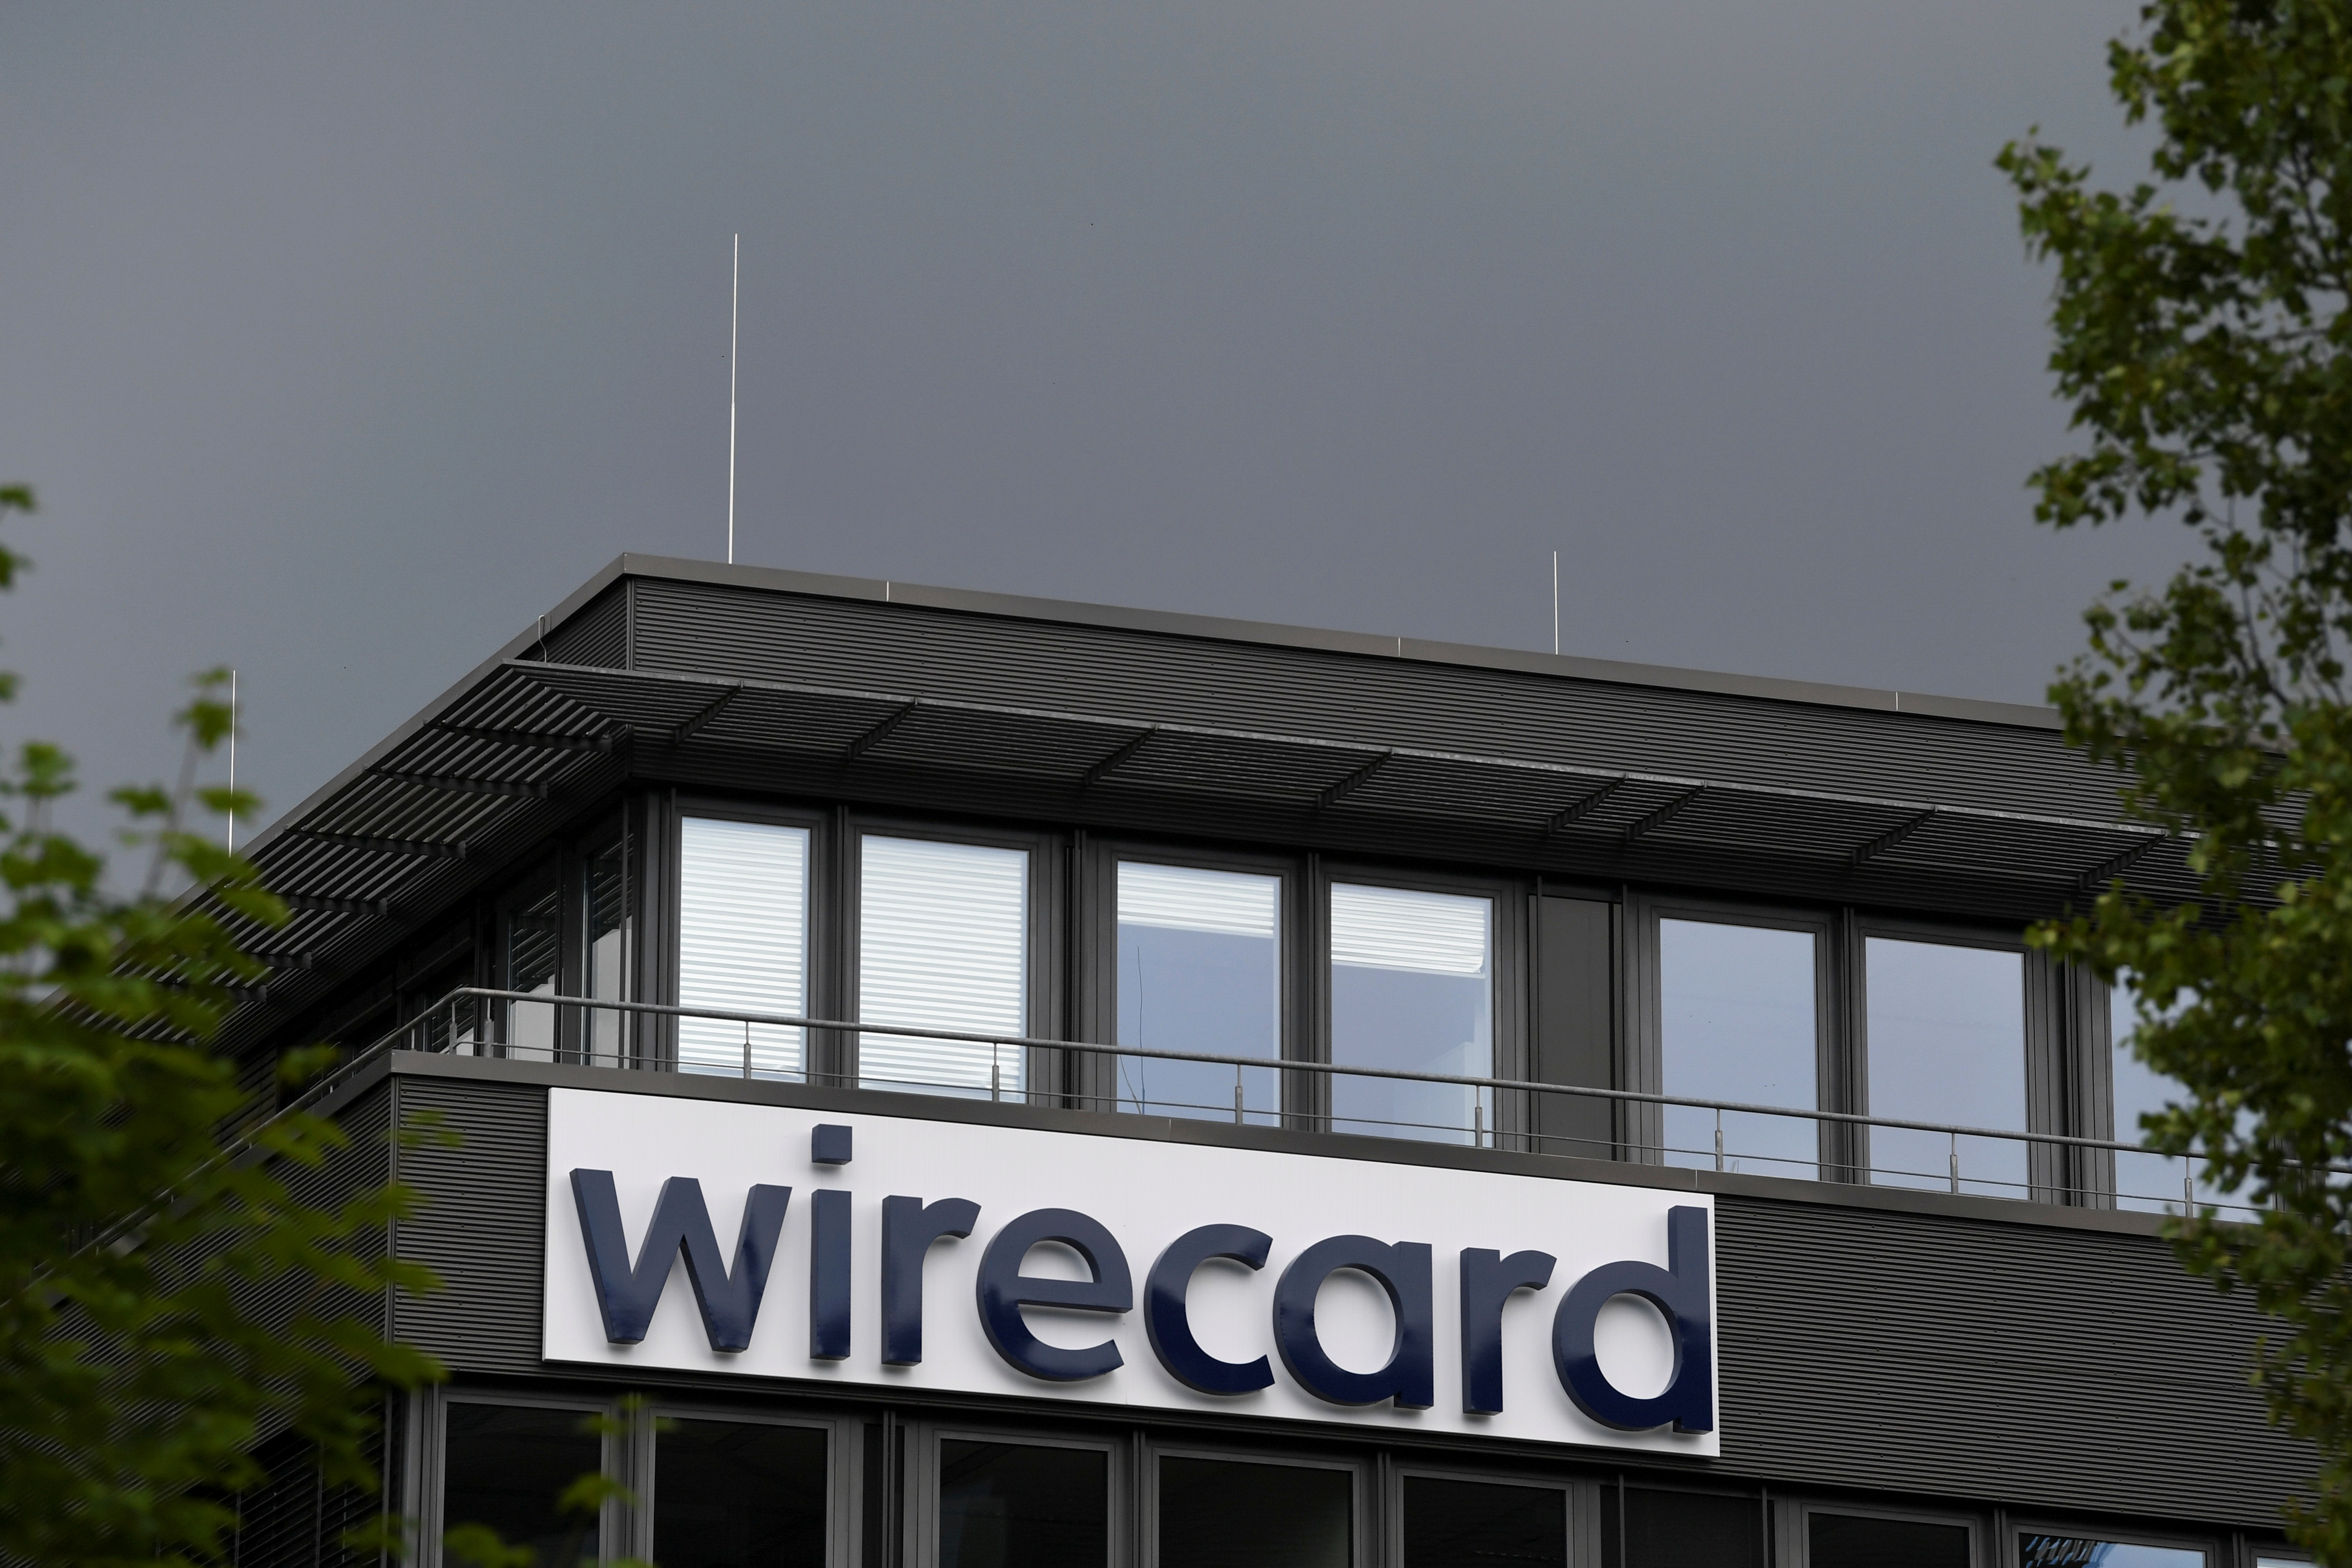 La sede central de Wirecard en Aschheim, cerca de Munich. (REUTERS/Andreas Gebert)